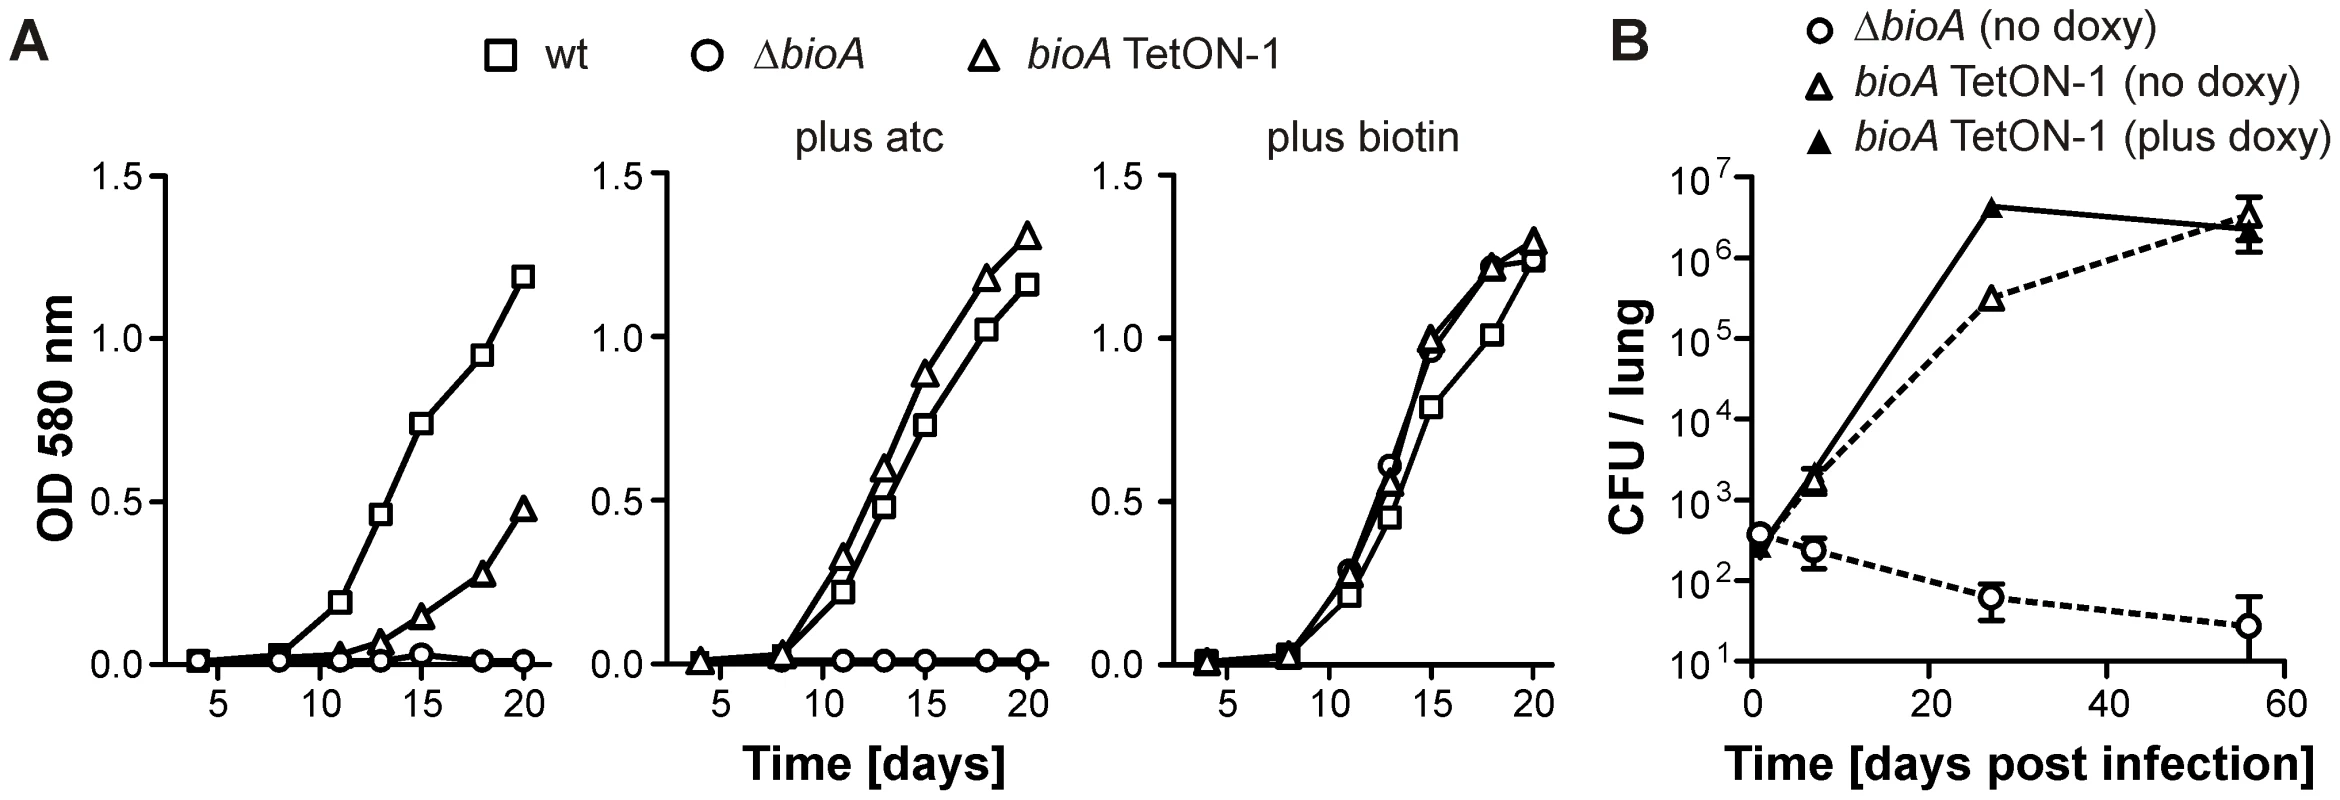 Growth of wt <i>Mtb</i>, <i>ΔbioA</i>, and <i>bioA</i> TetON-1 in liquid media and mice.